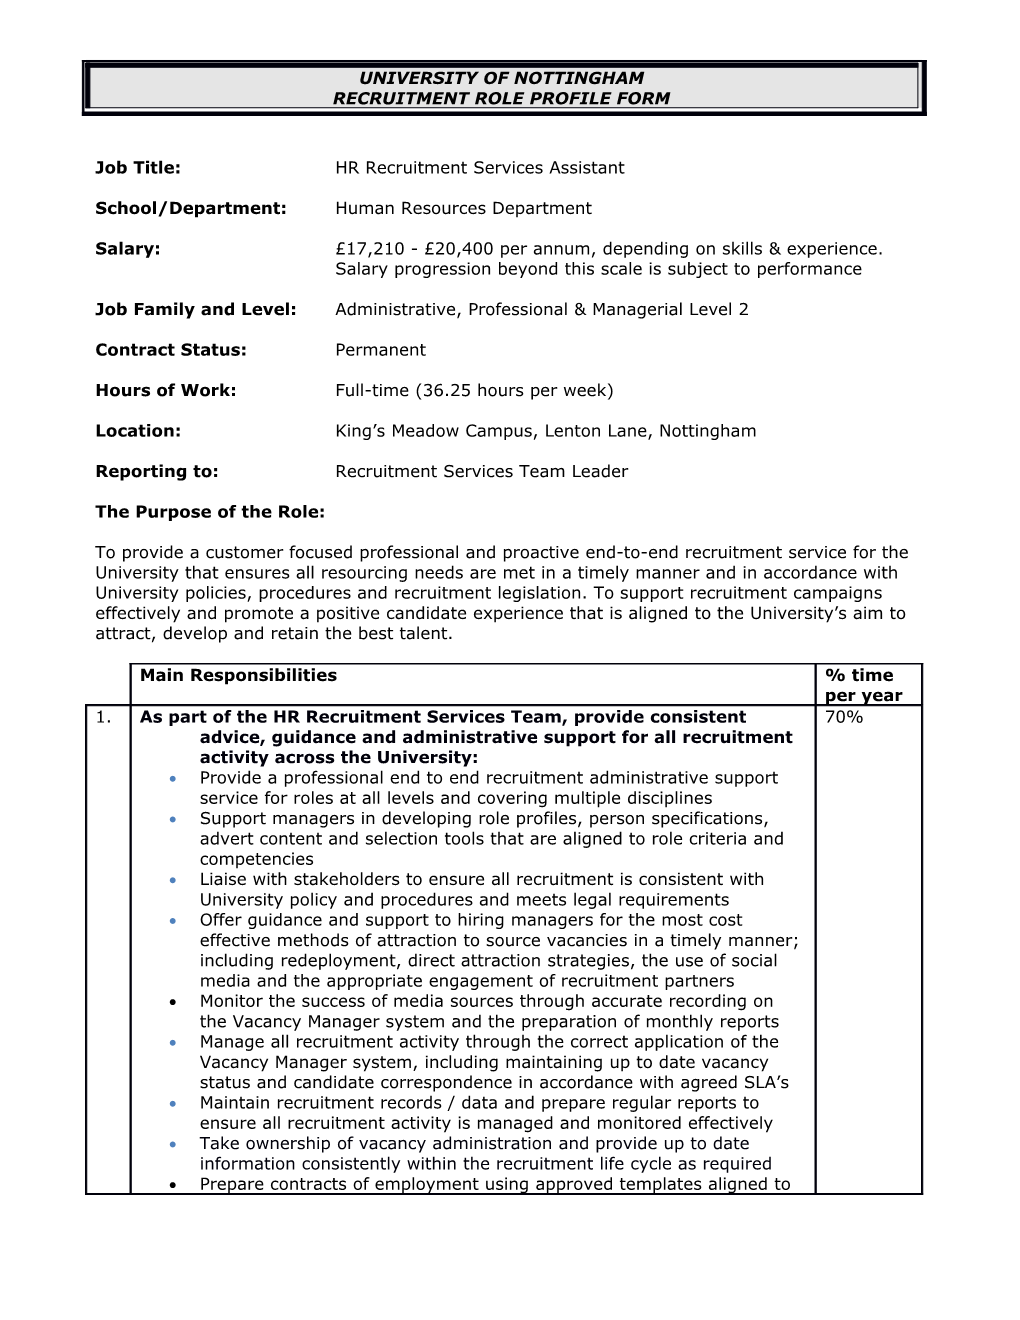 Recruitment Role Profile Form s2